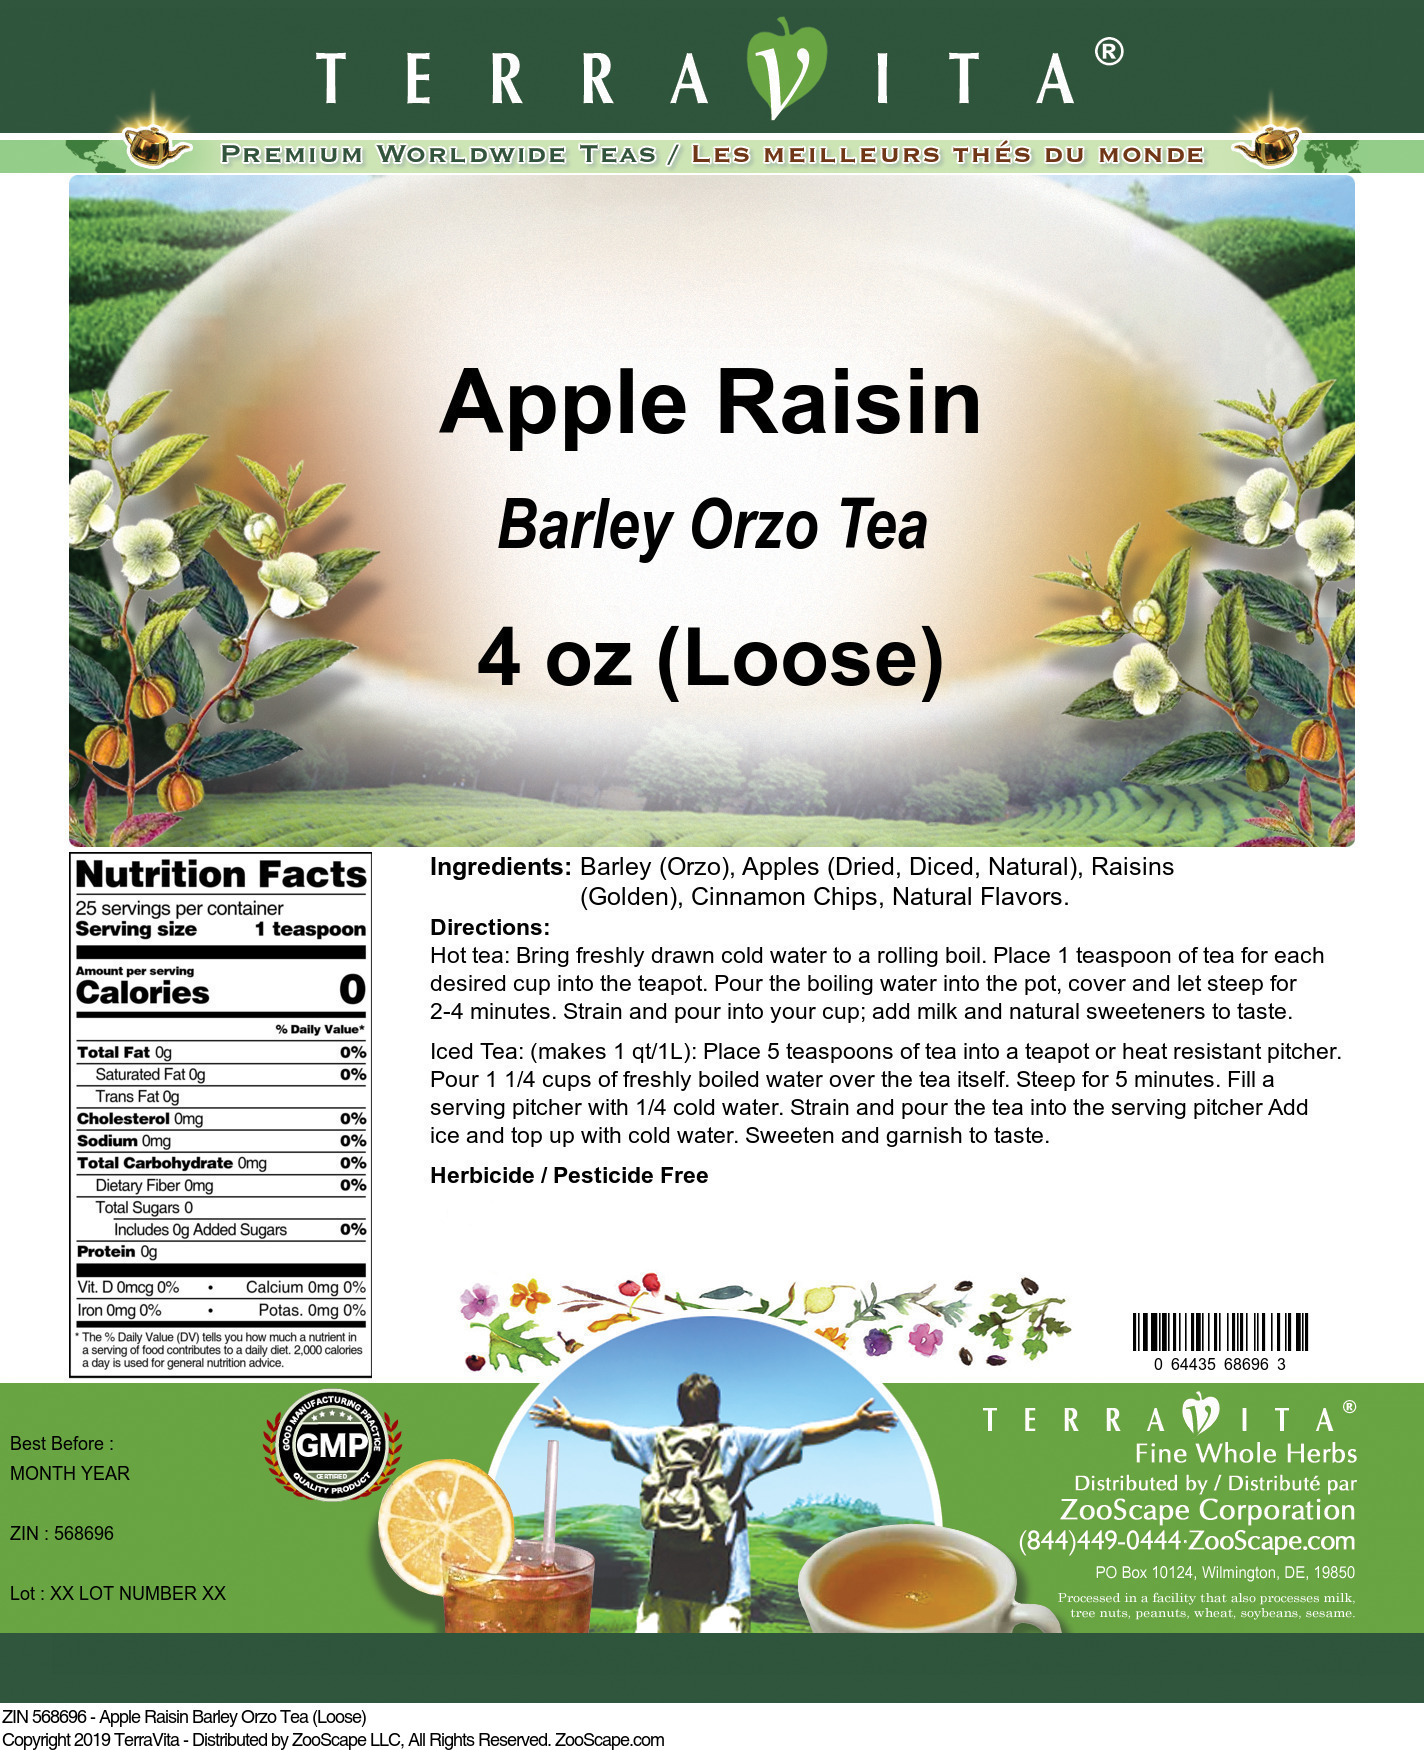 Apple Raisin Barley Orzo Tea (Loose) - Label